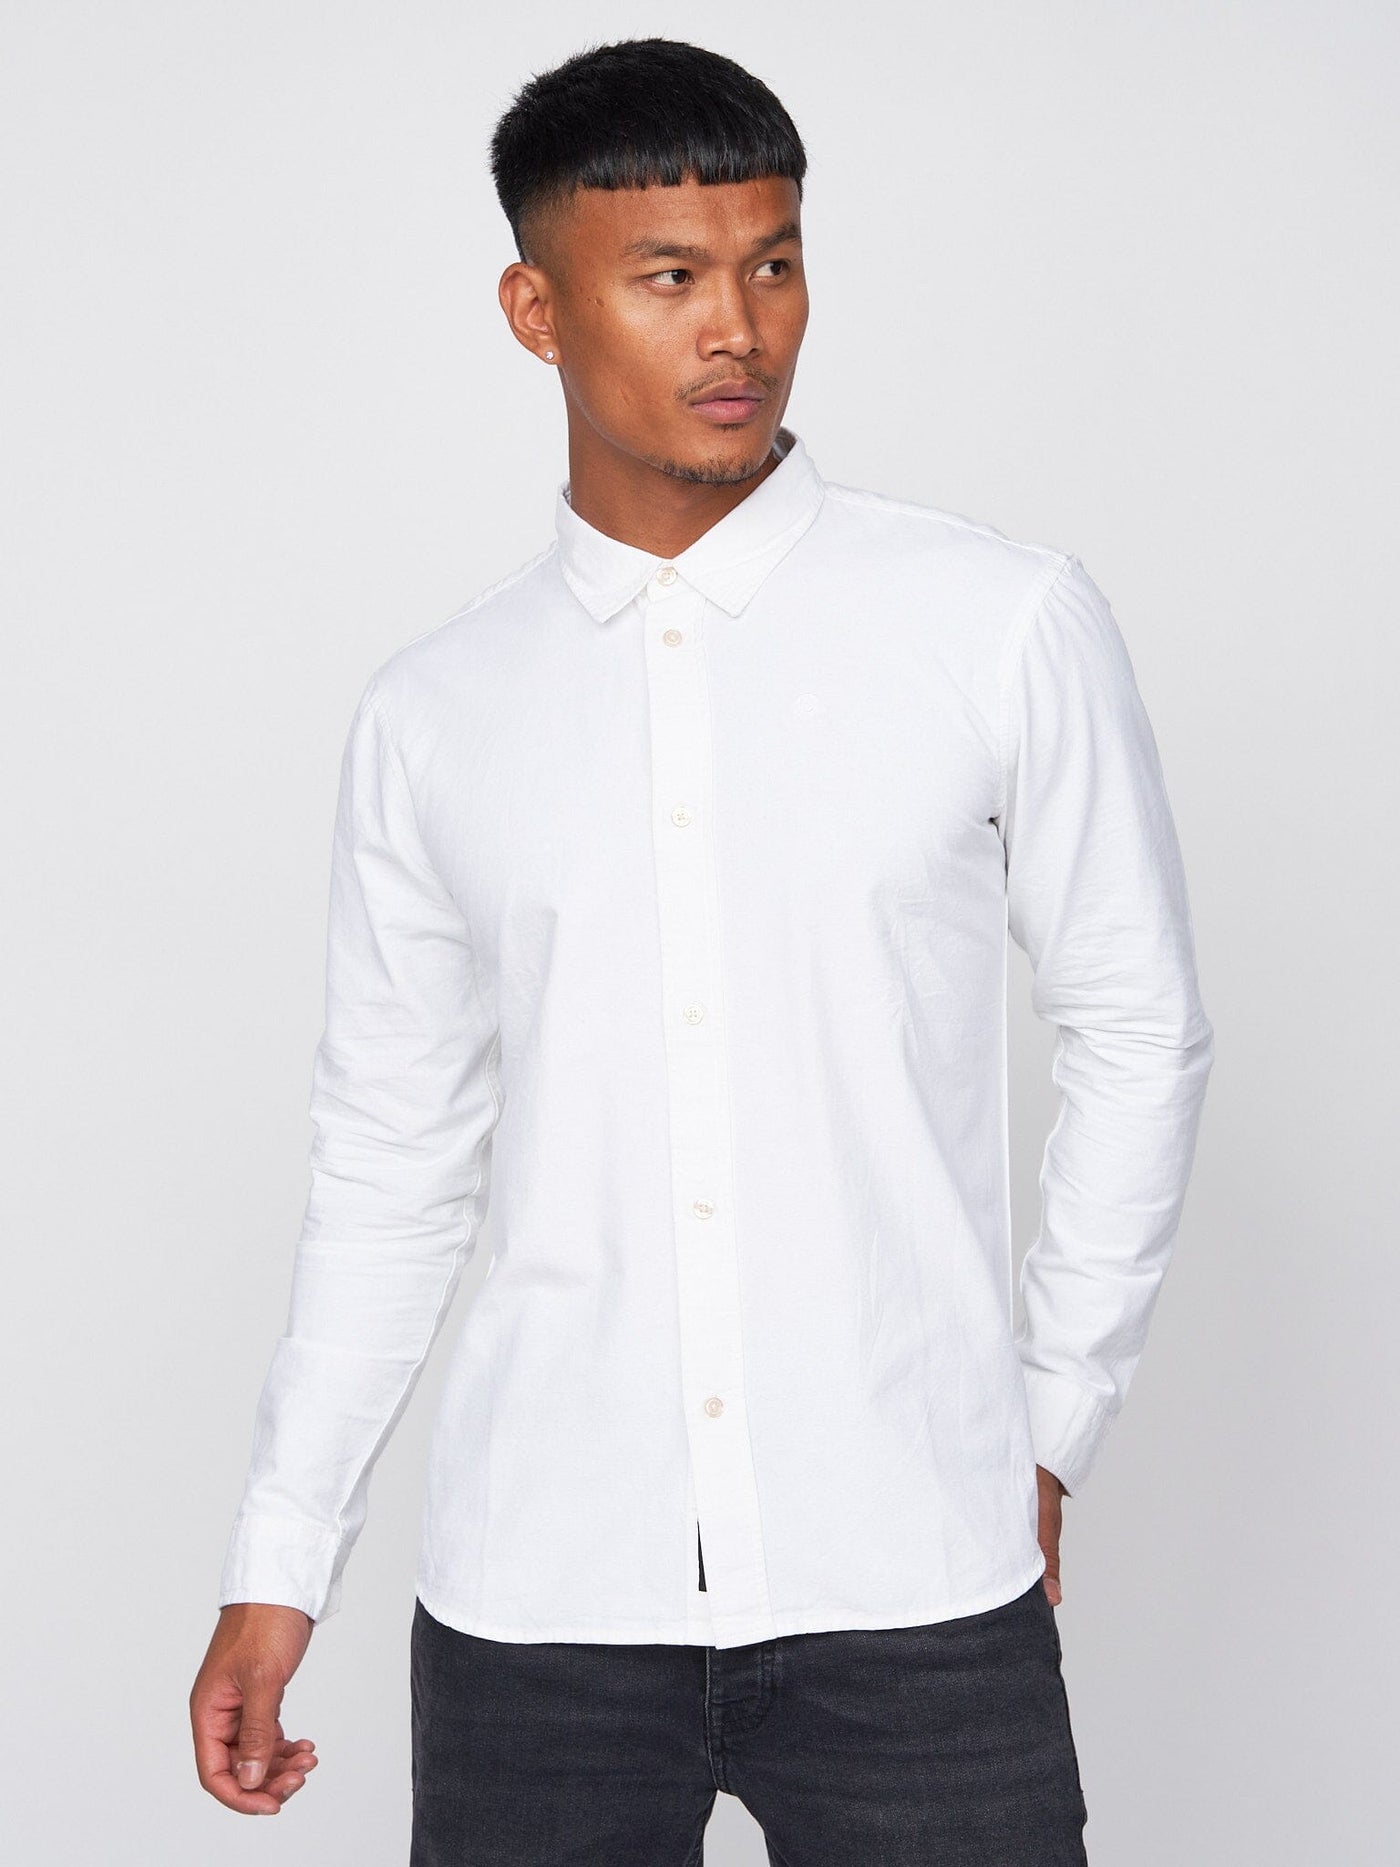 Yuknow Shirt White